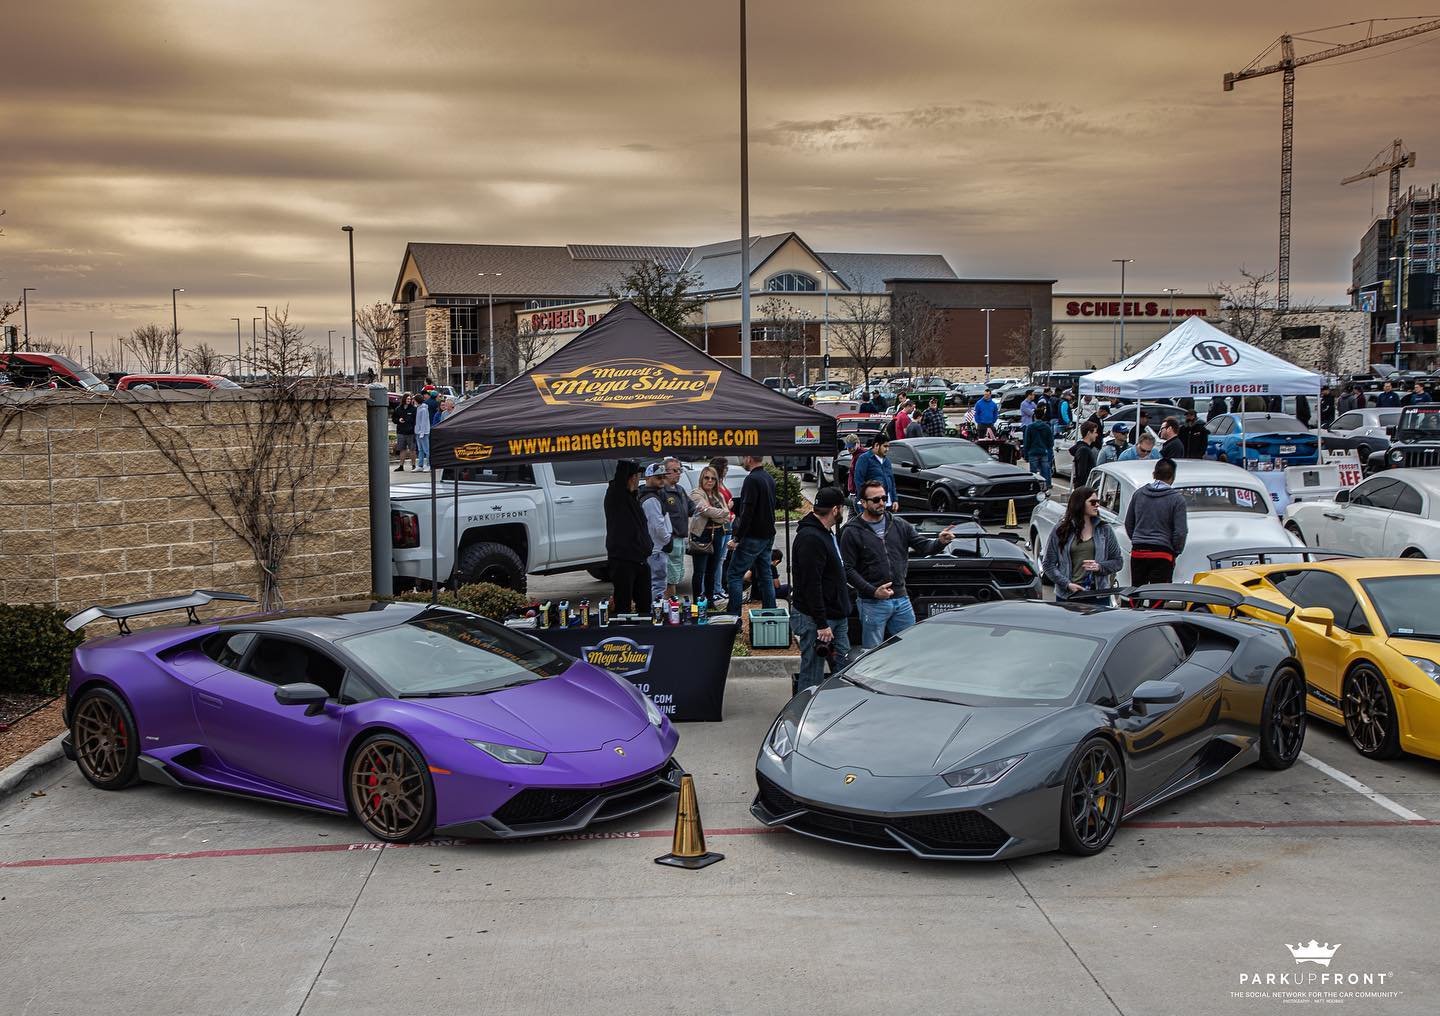 Two Lamborghini's parked at Cars and Cantina, Dallas Car Community